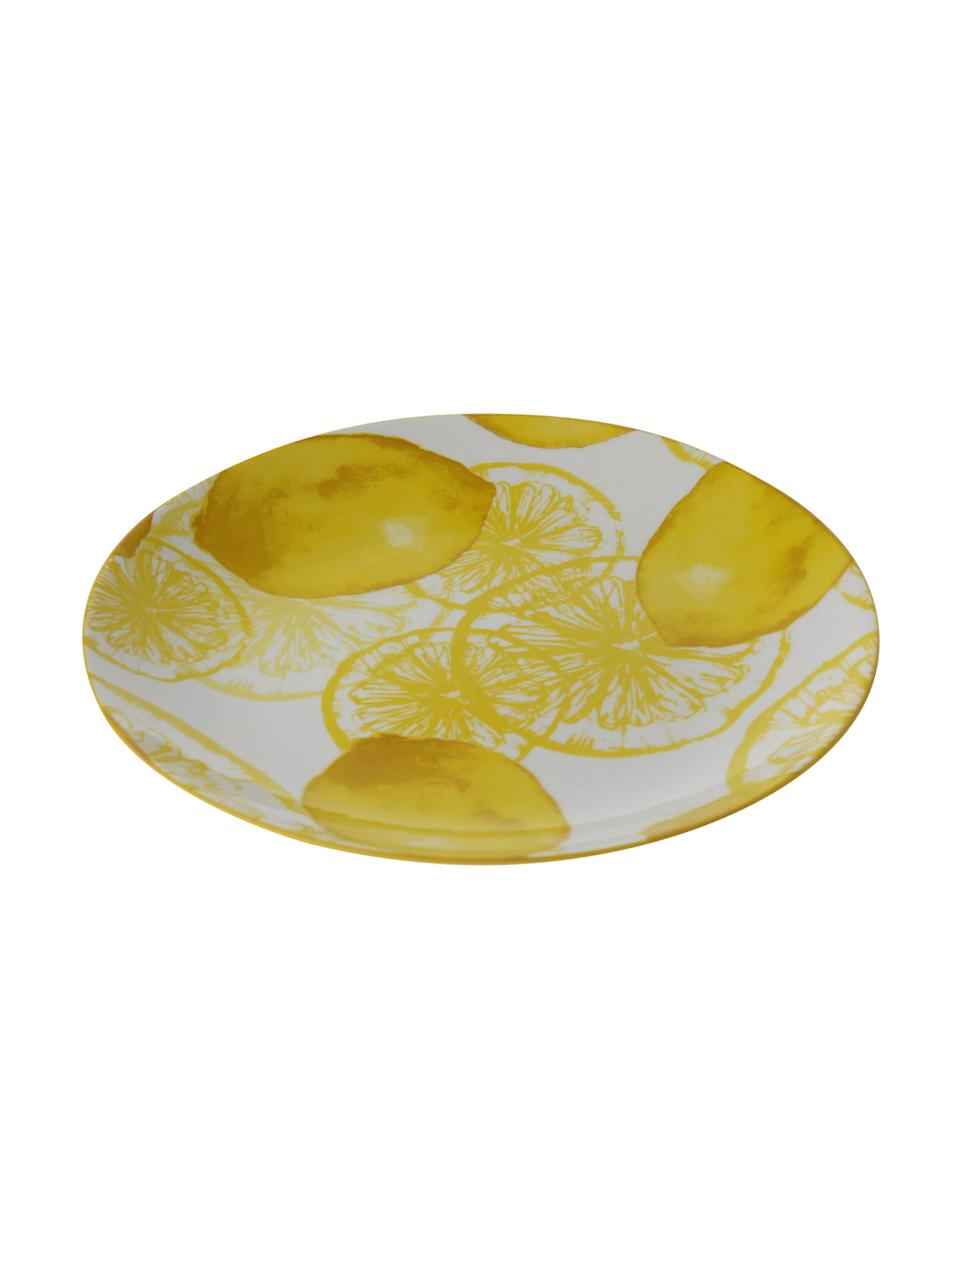 Piattino da dessert Lemon 2 pz, Porcellana, Bianco, giallo, Ø 20 cm